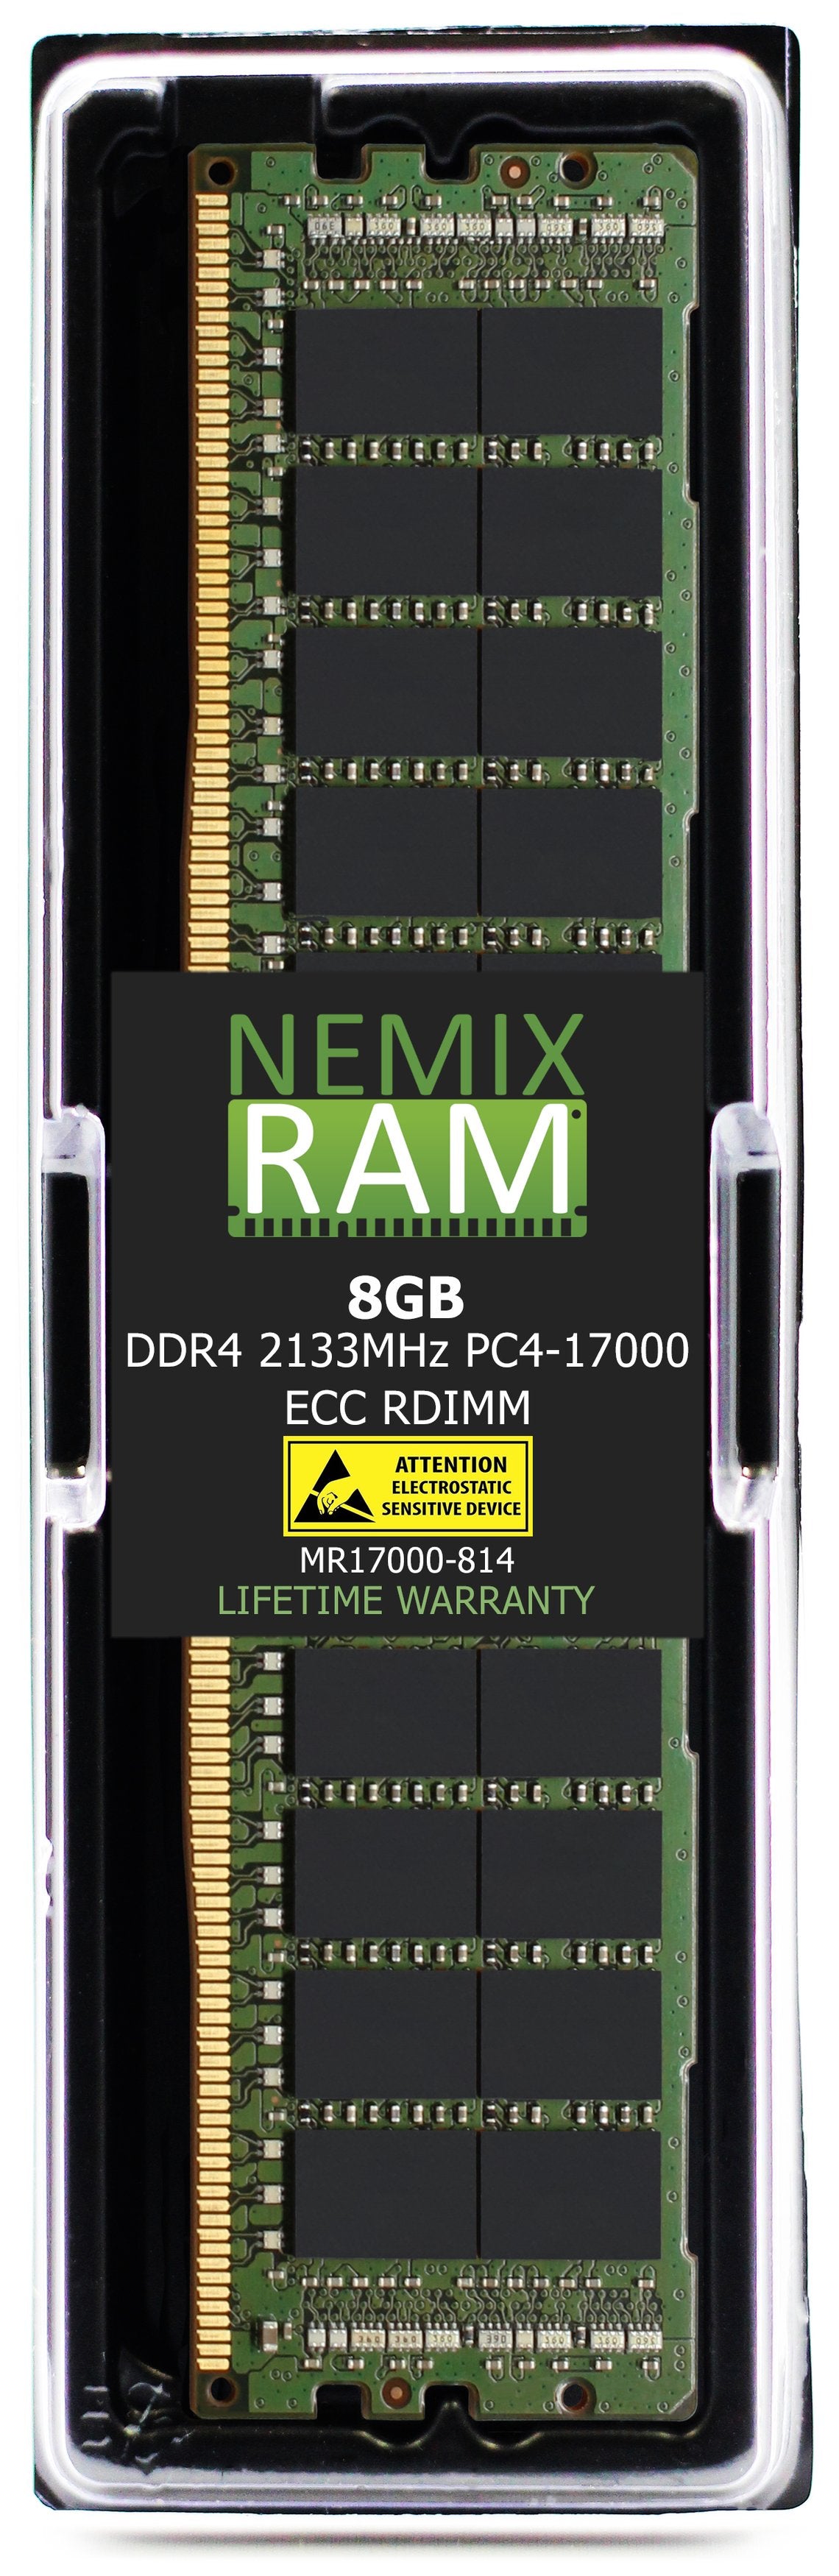 NEC Express5800 T120f Memory Module N8102-645F 8GB DDR4 2133MHZ PC4-17000 RDIMM